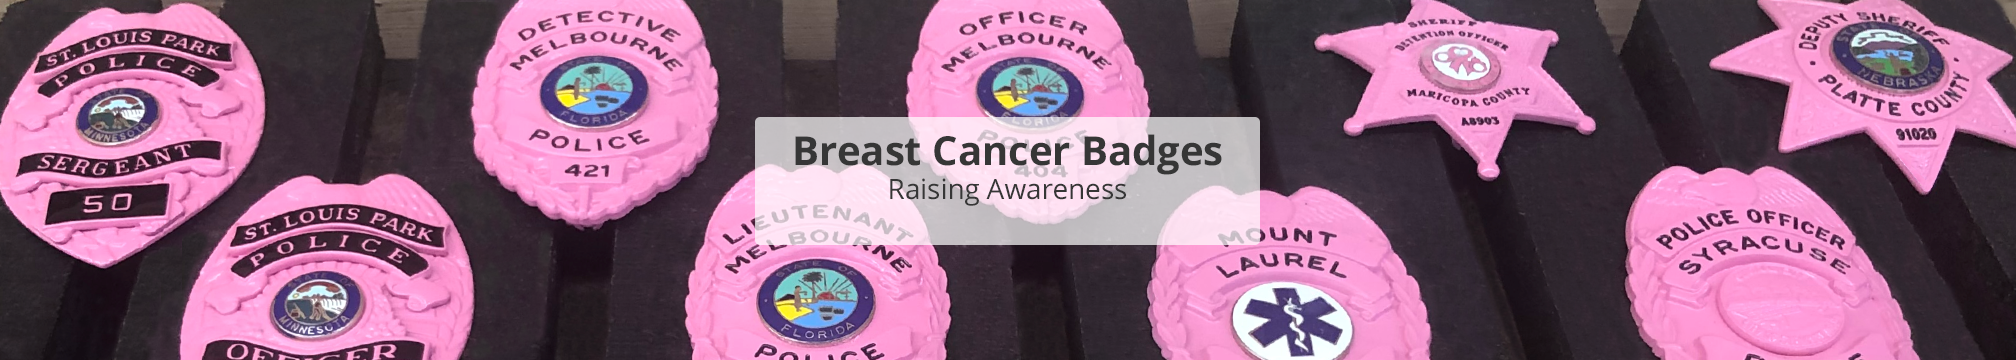 Breast Cancer Badges